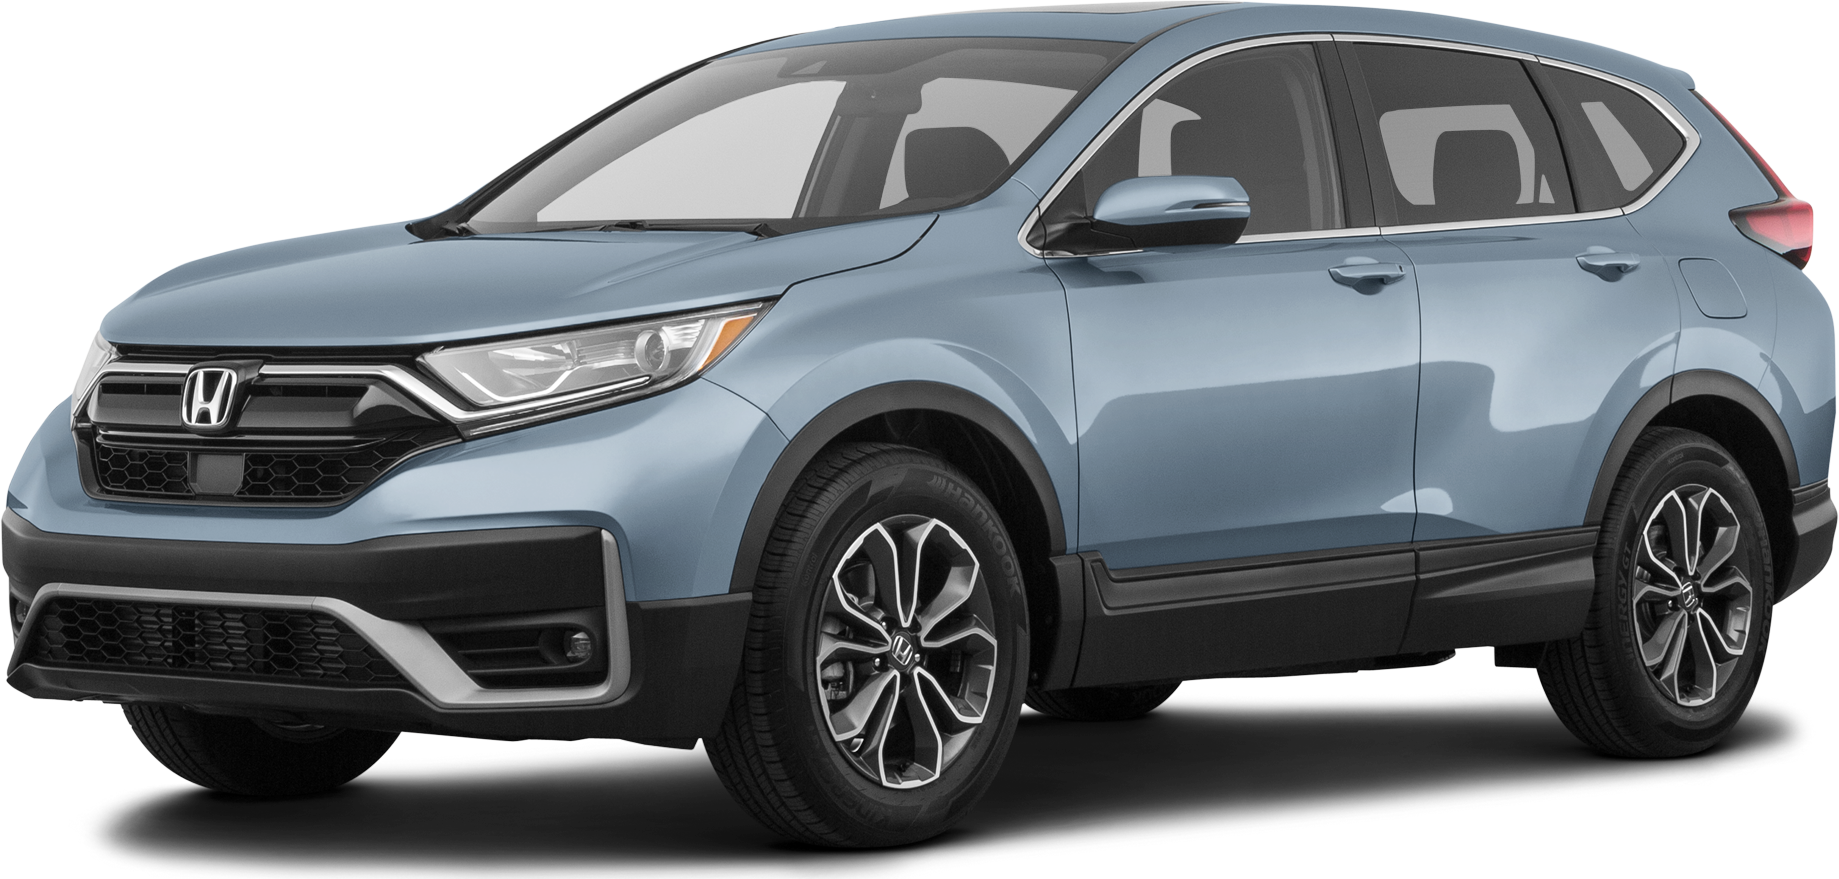 2020 Honda CRV Price, Value, Ratings & Reviews Kelley Blue Book